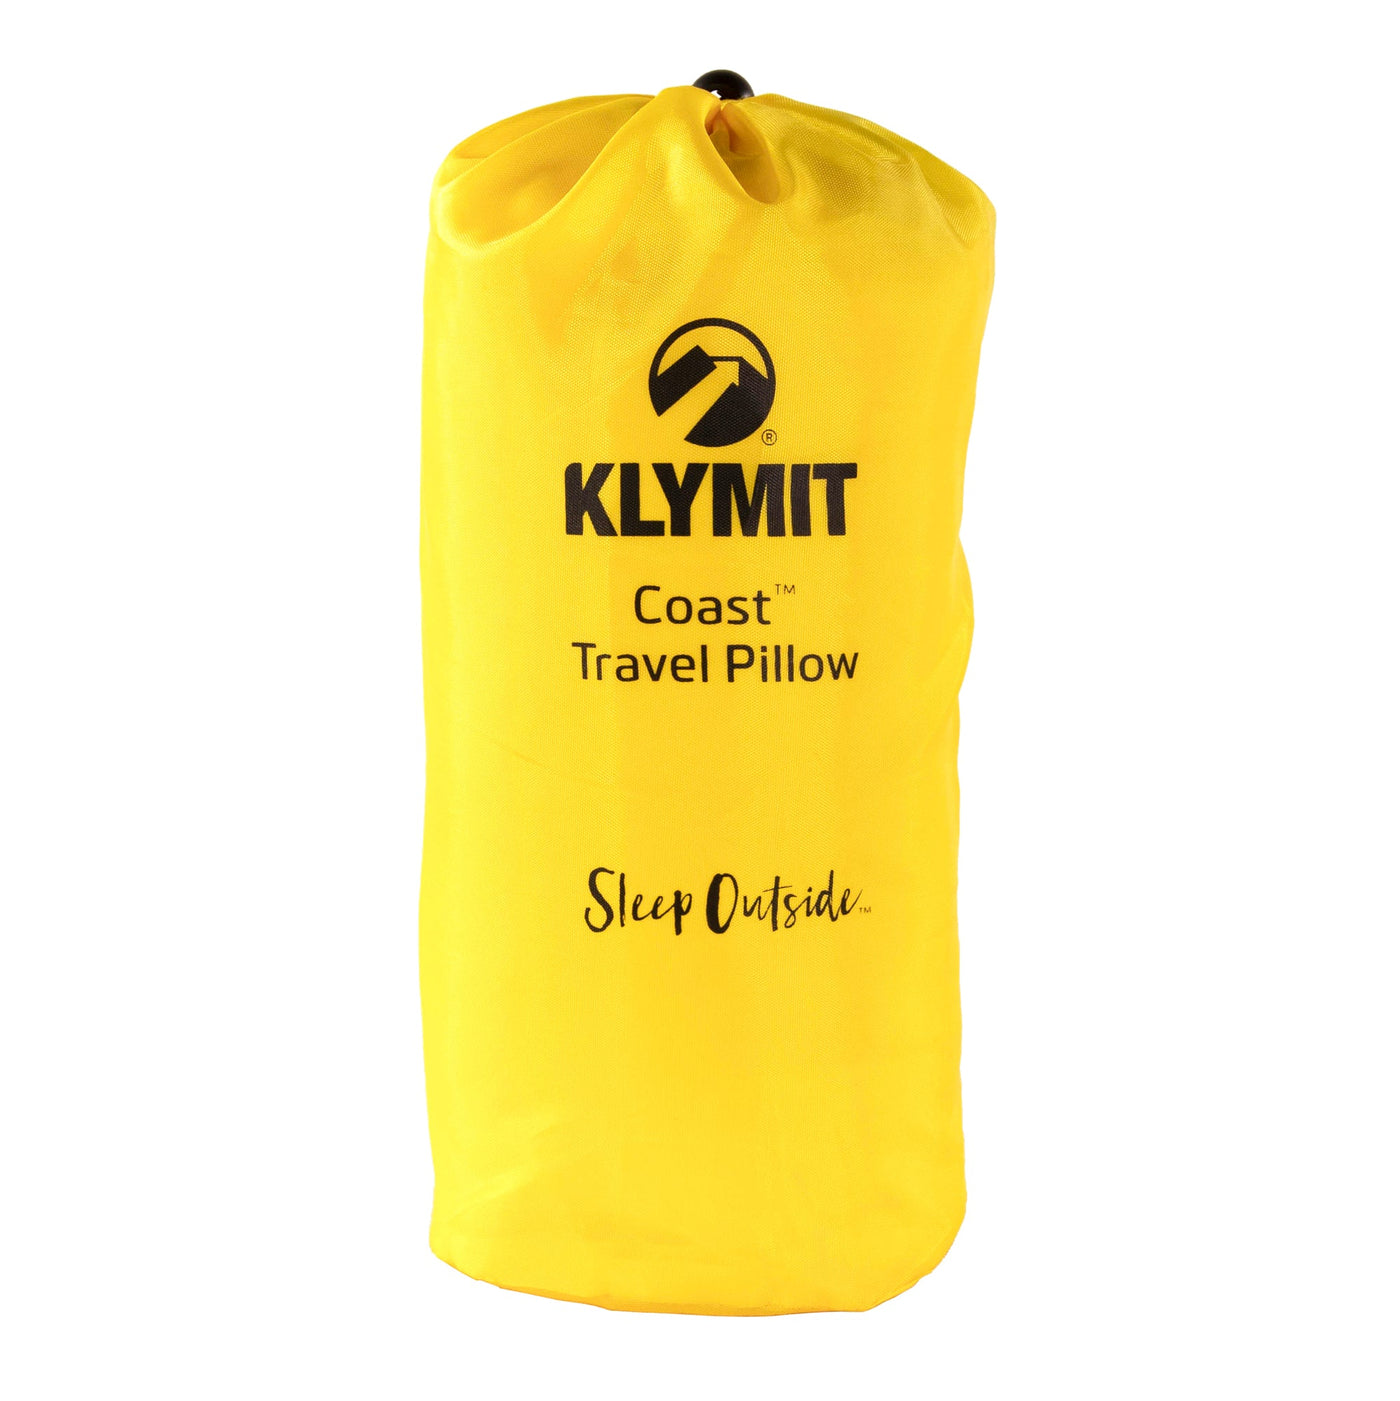 Coast Travel Pillow by Klymit